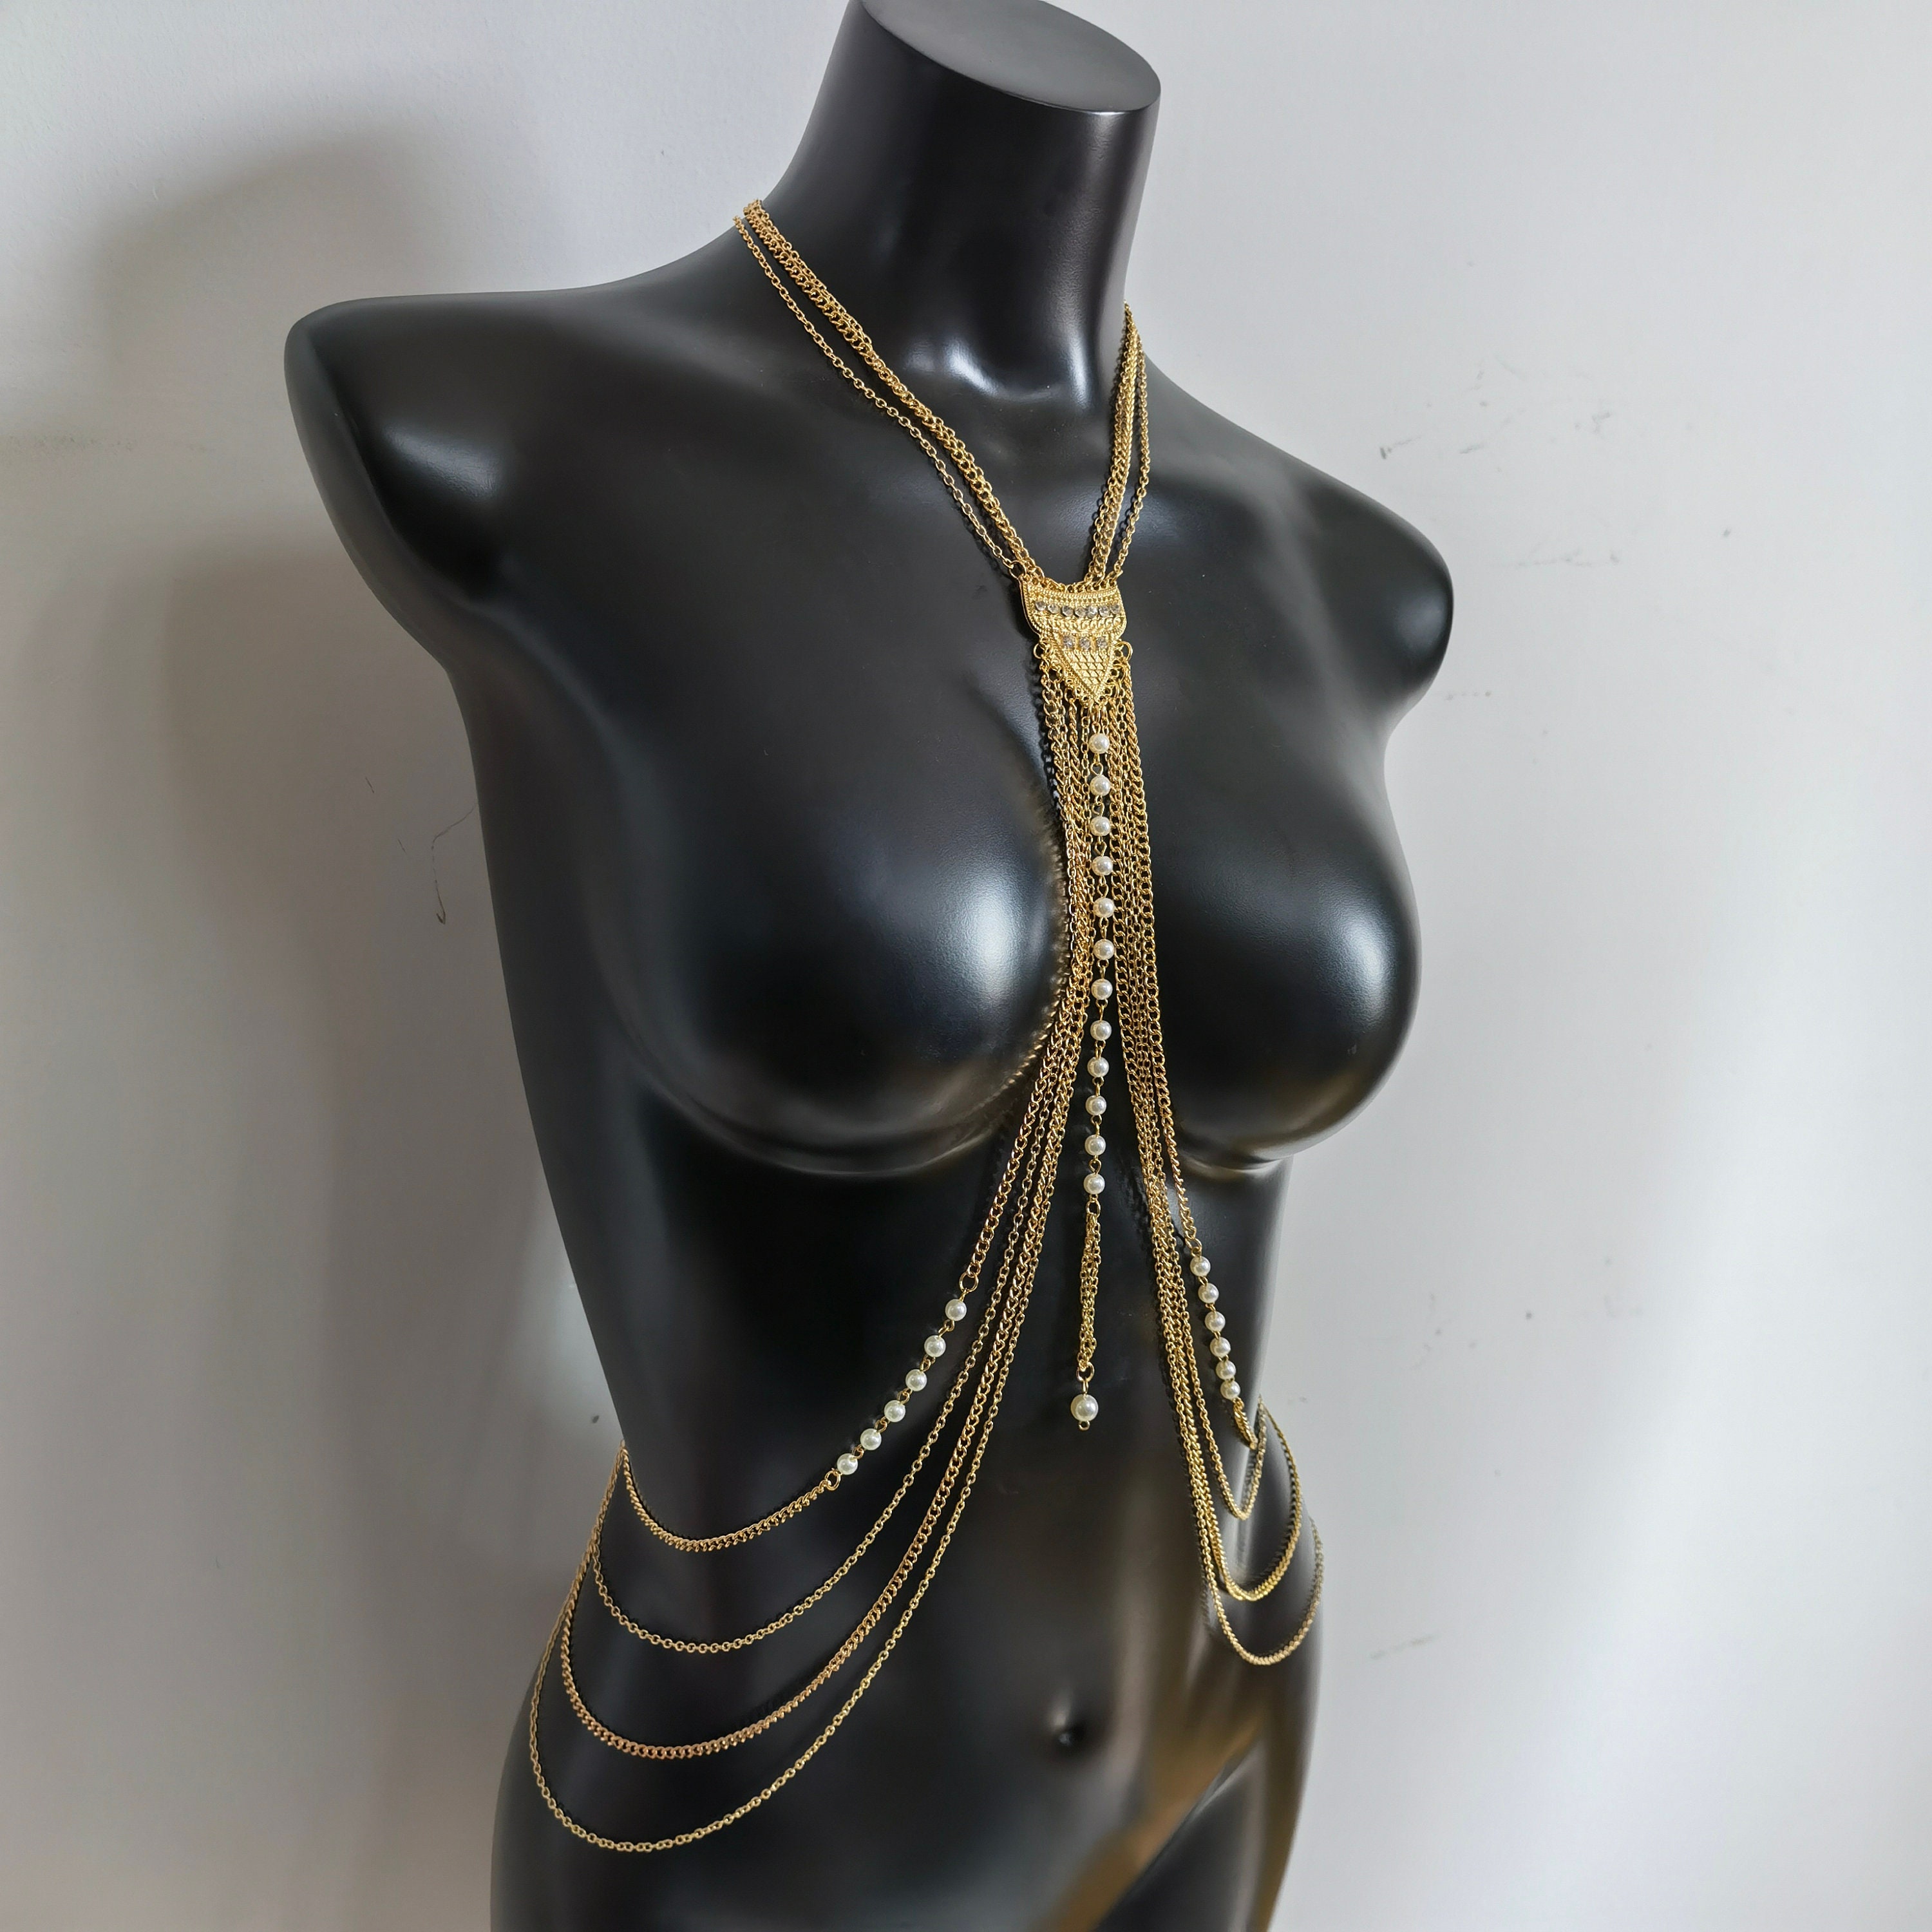 Sexy Bra Chains Crystal Waist Chain Rhinestone Body Chain Bikini Top Bra  Chain Gold Body Jewelry For Women Girls